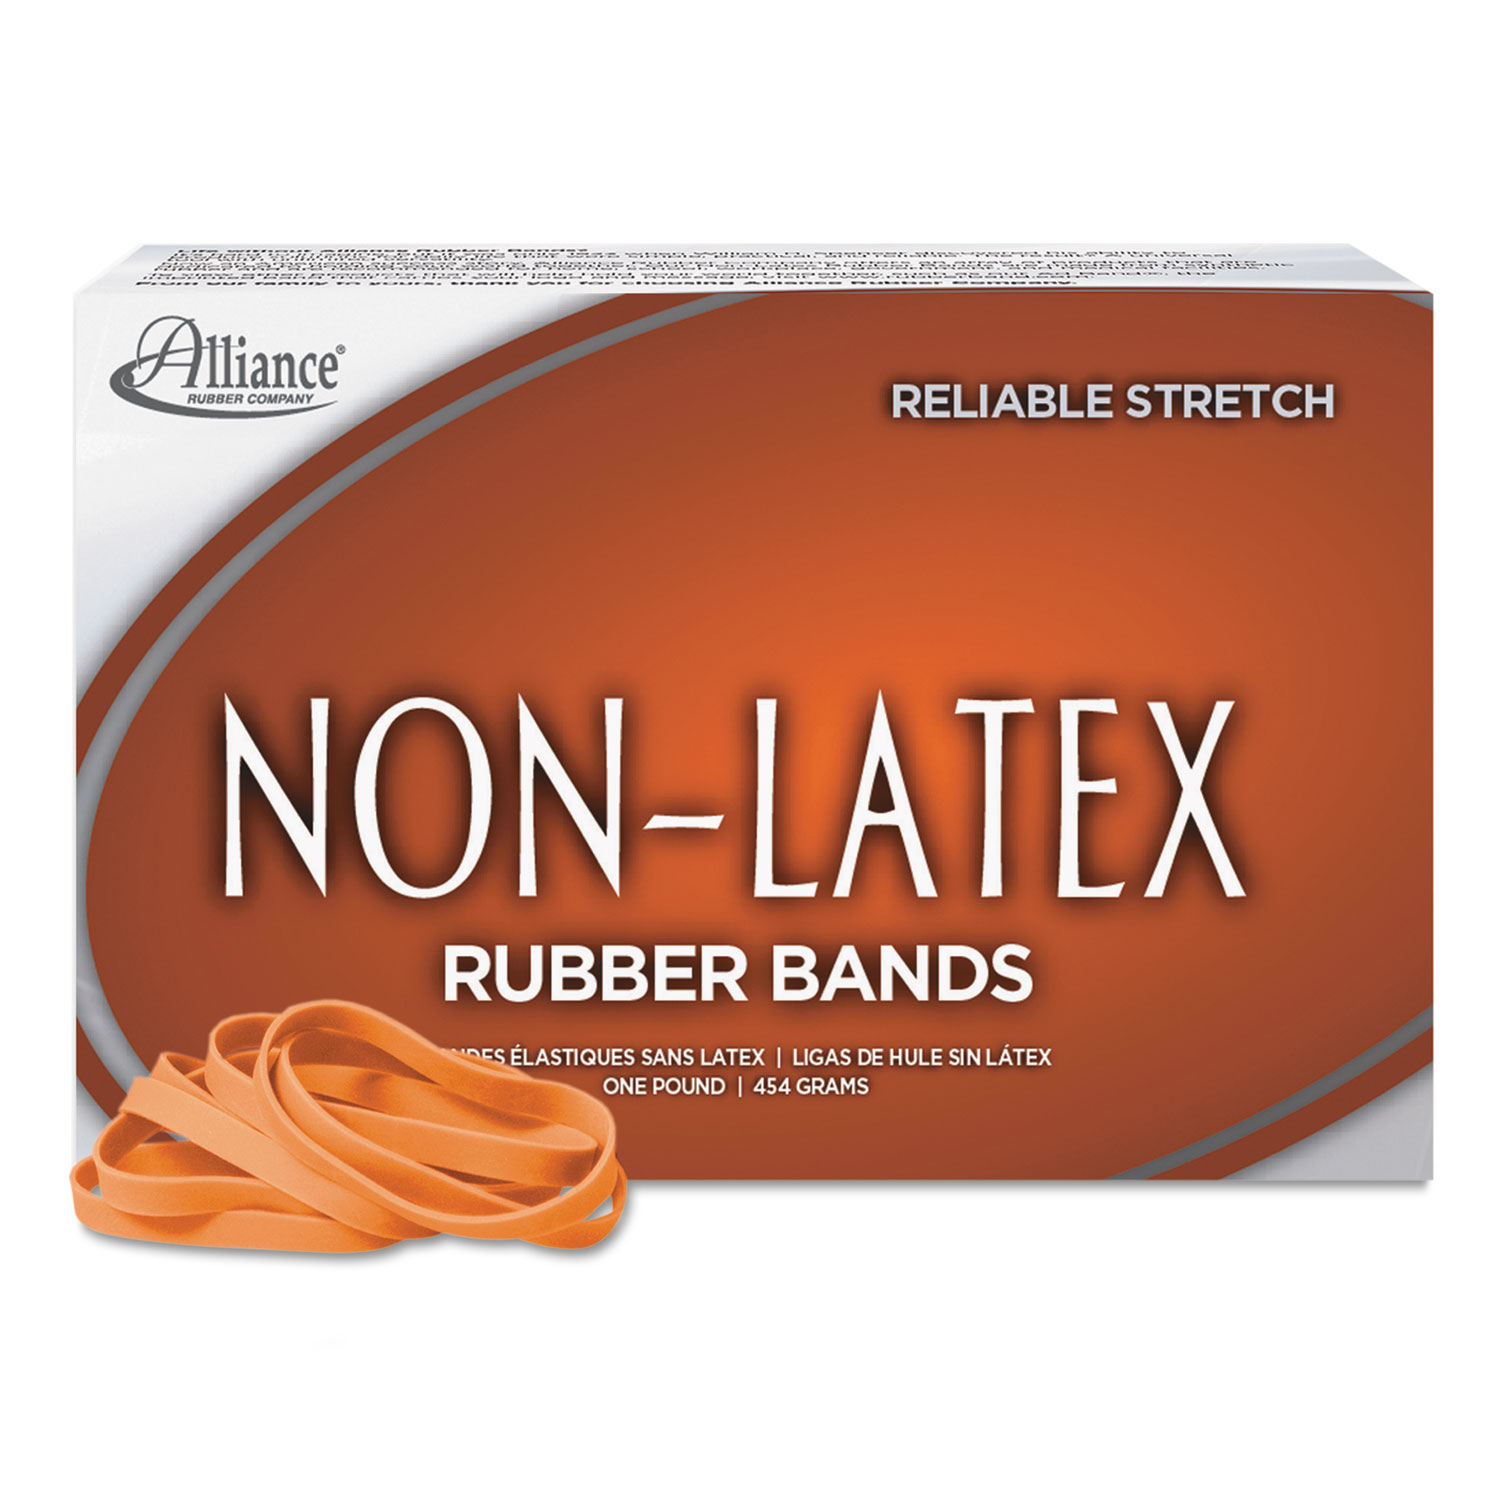 Non-Latex Rubber Bands, Sz. 64, Orange, 3 1/2 x 1/4, 380 Bands/1lb Box